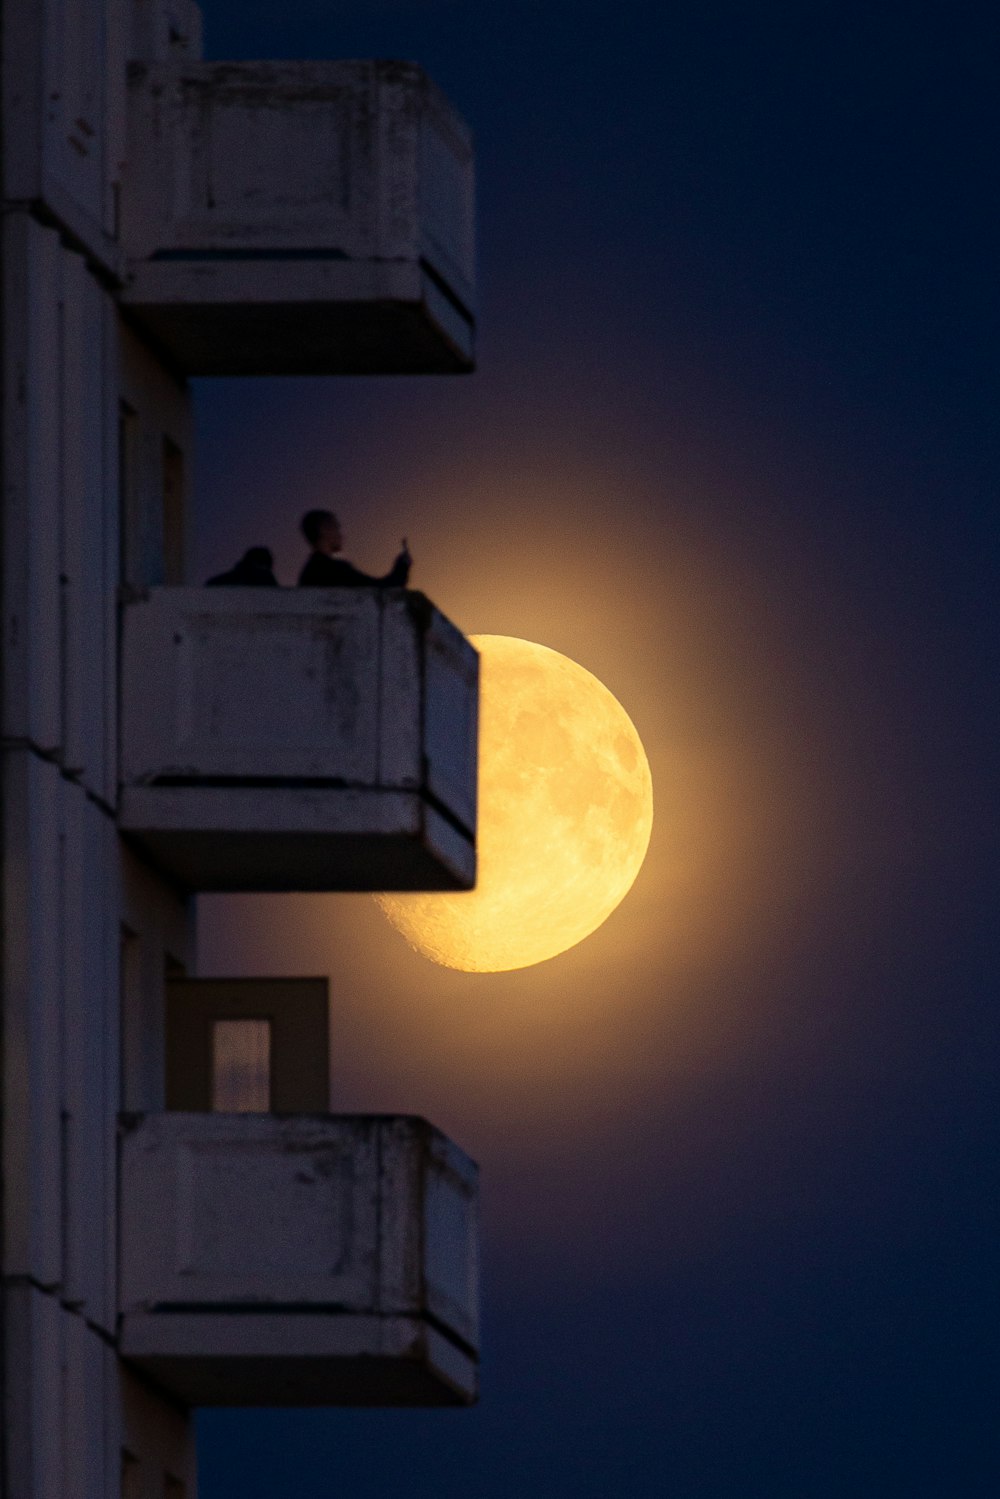 a full moon seen through a window of a building